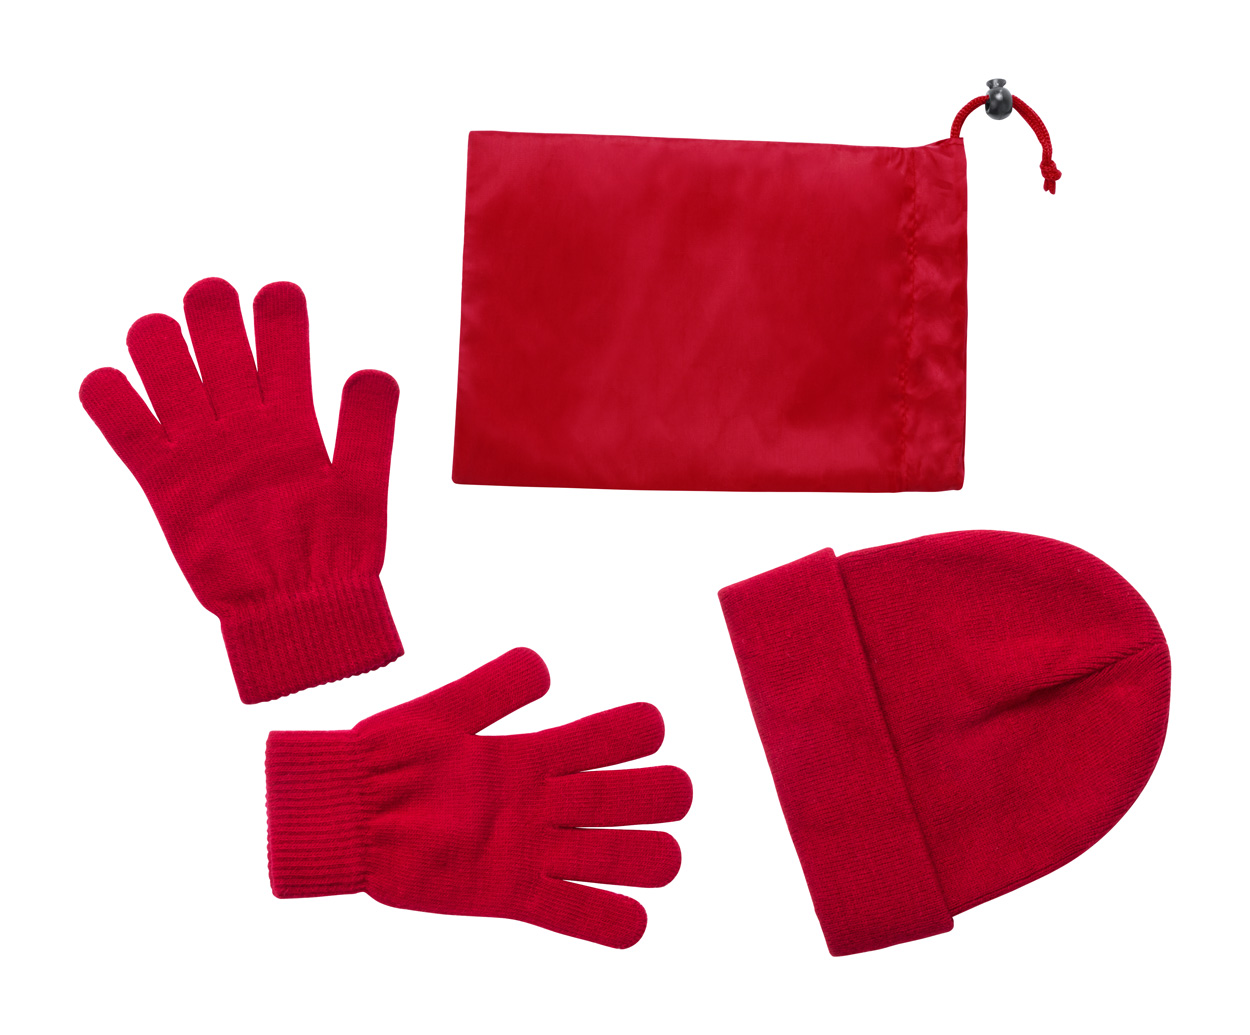 Duvel cap and gloves set